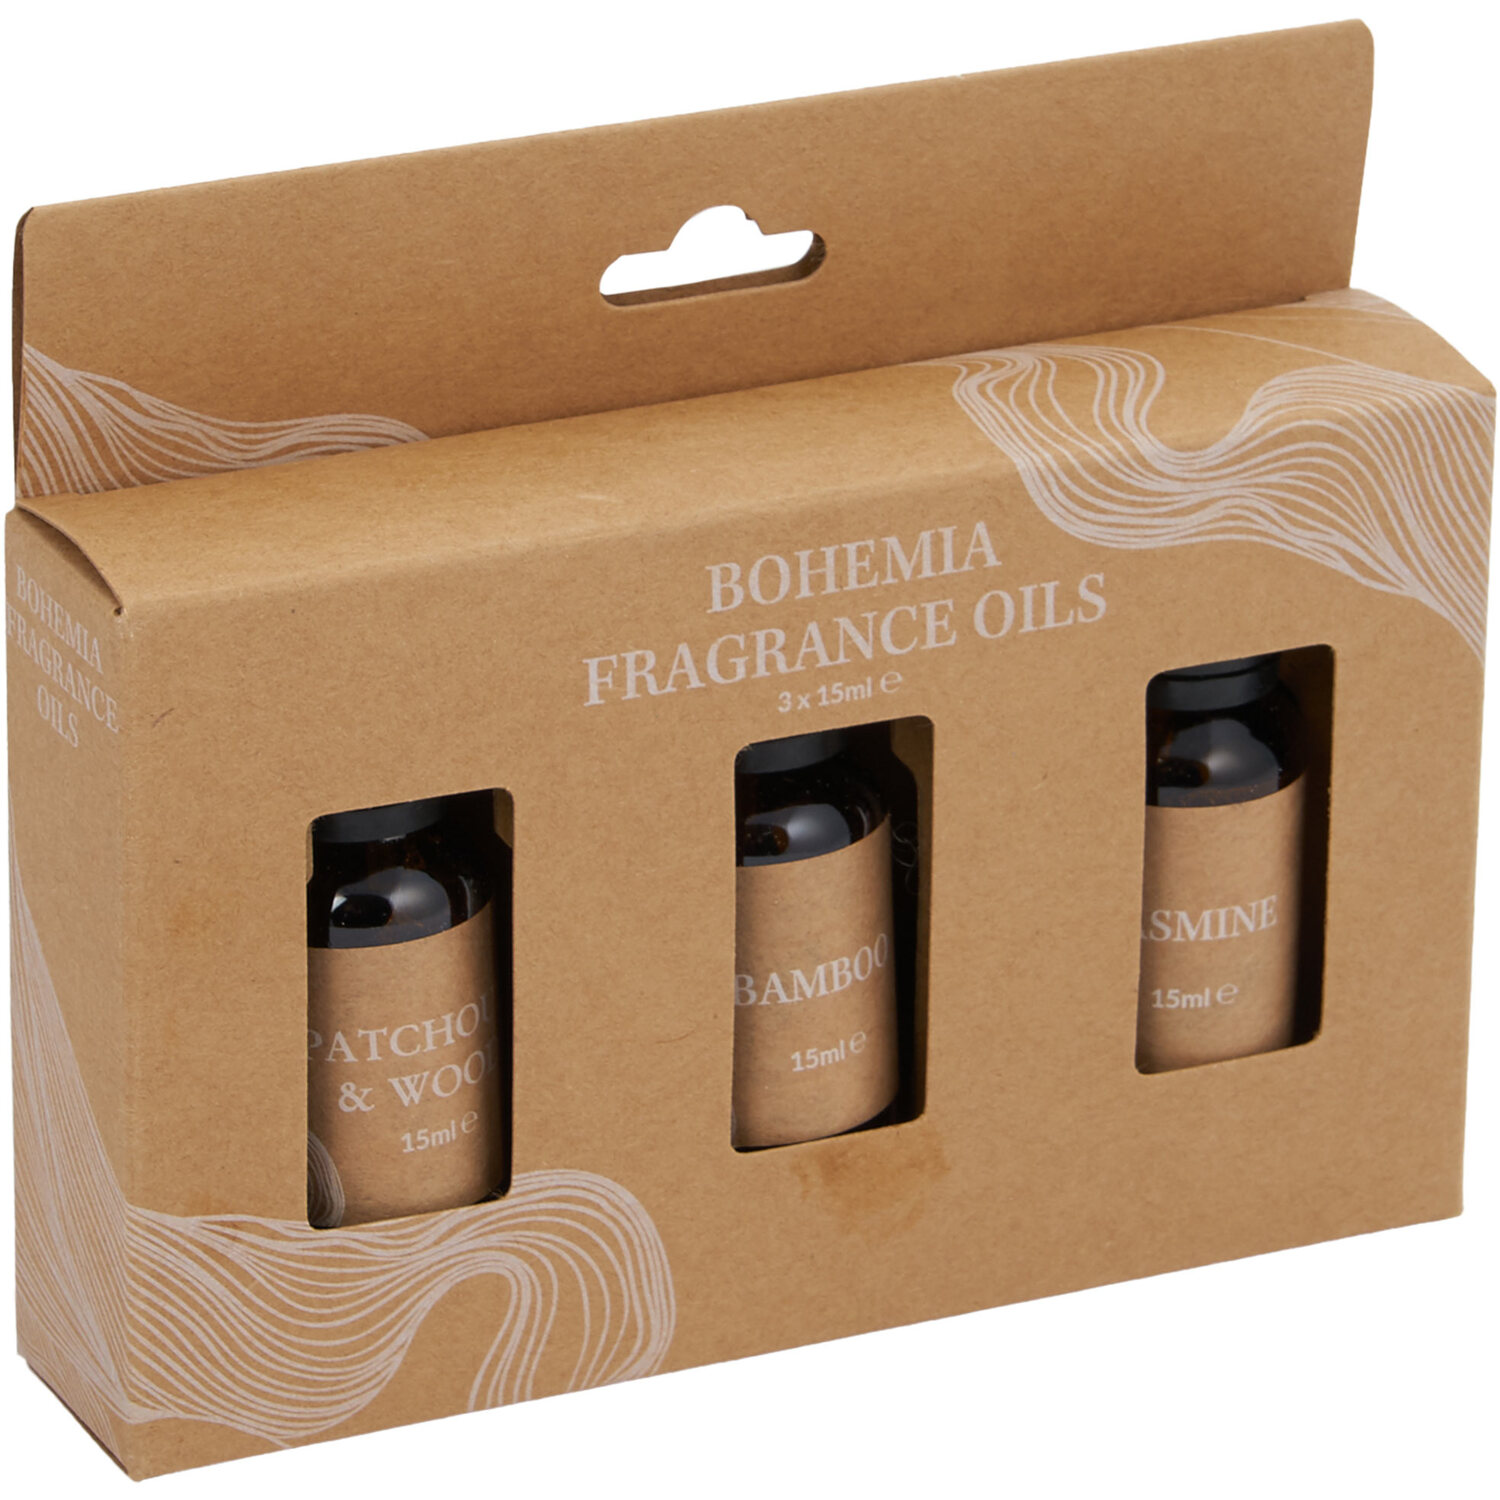 Bohemia Fragrance Oils - Natural Image 1